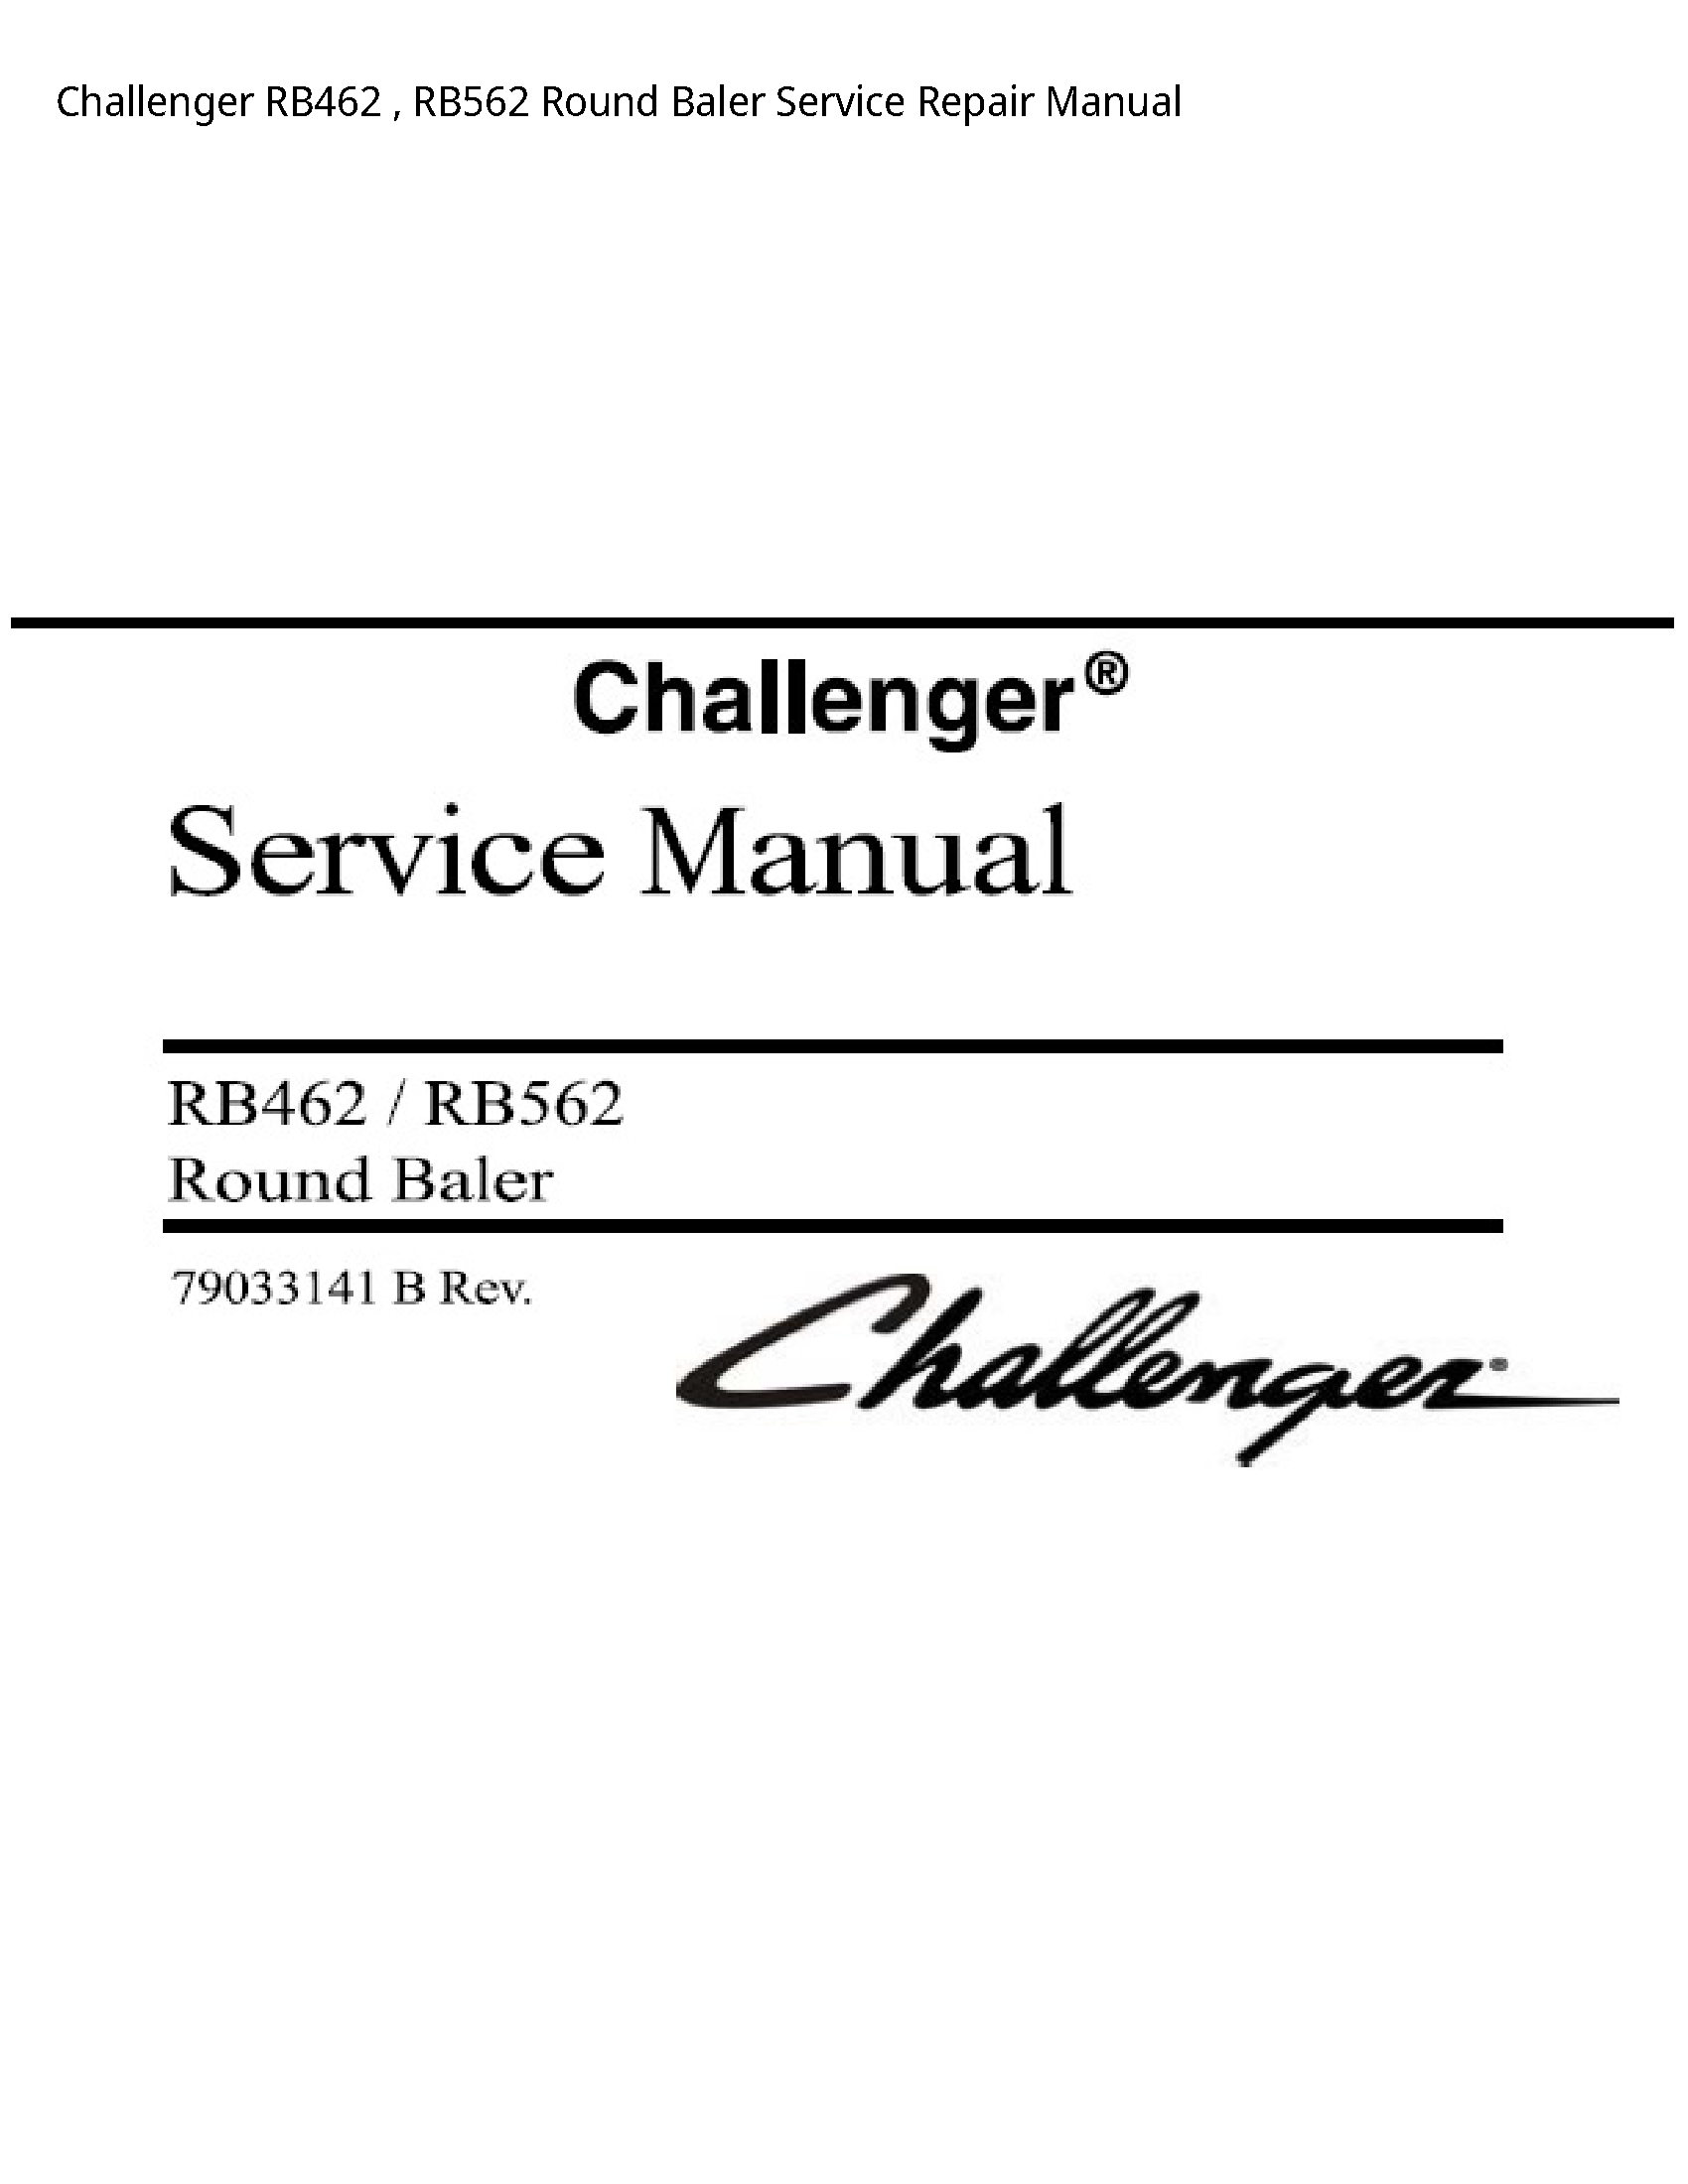 Challenger RB462 Round Baler manual